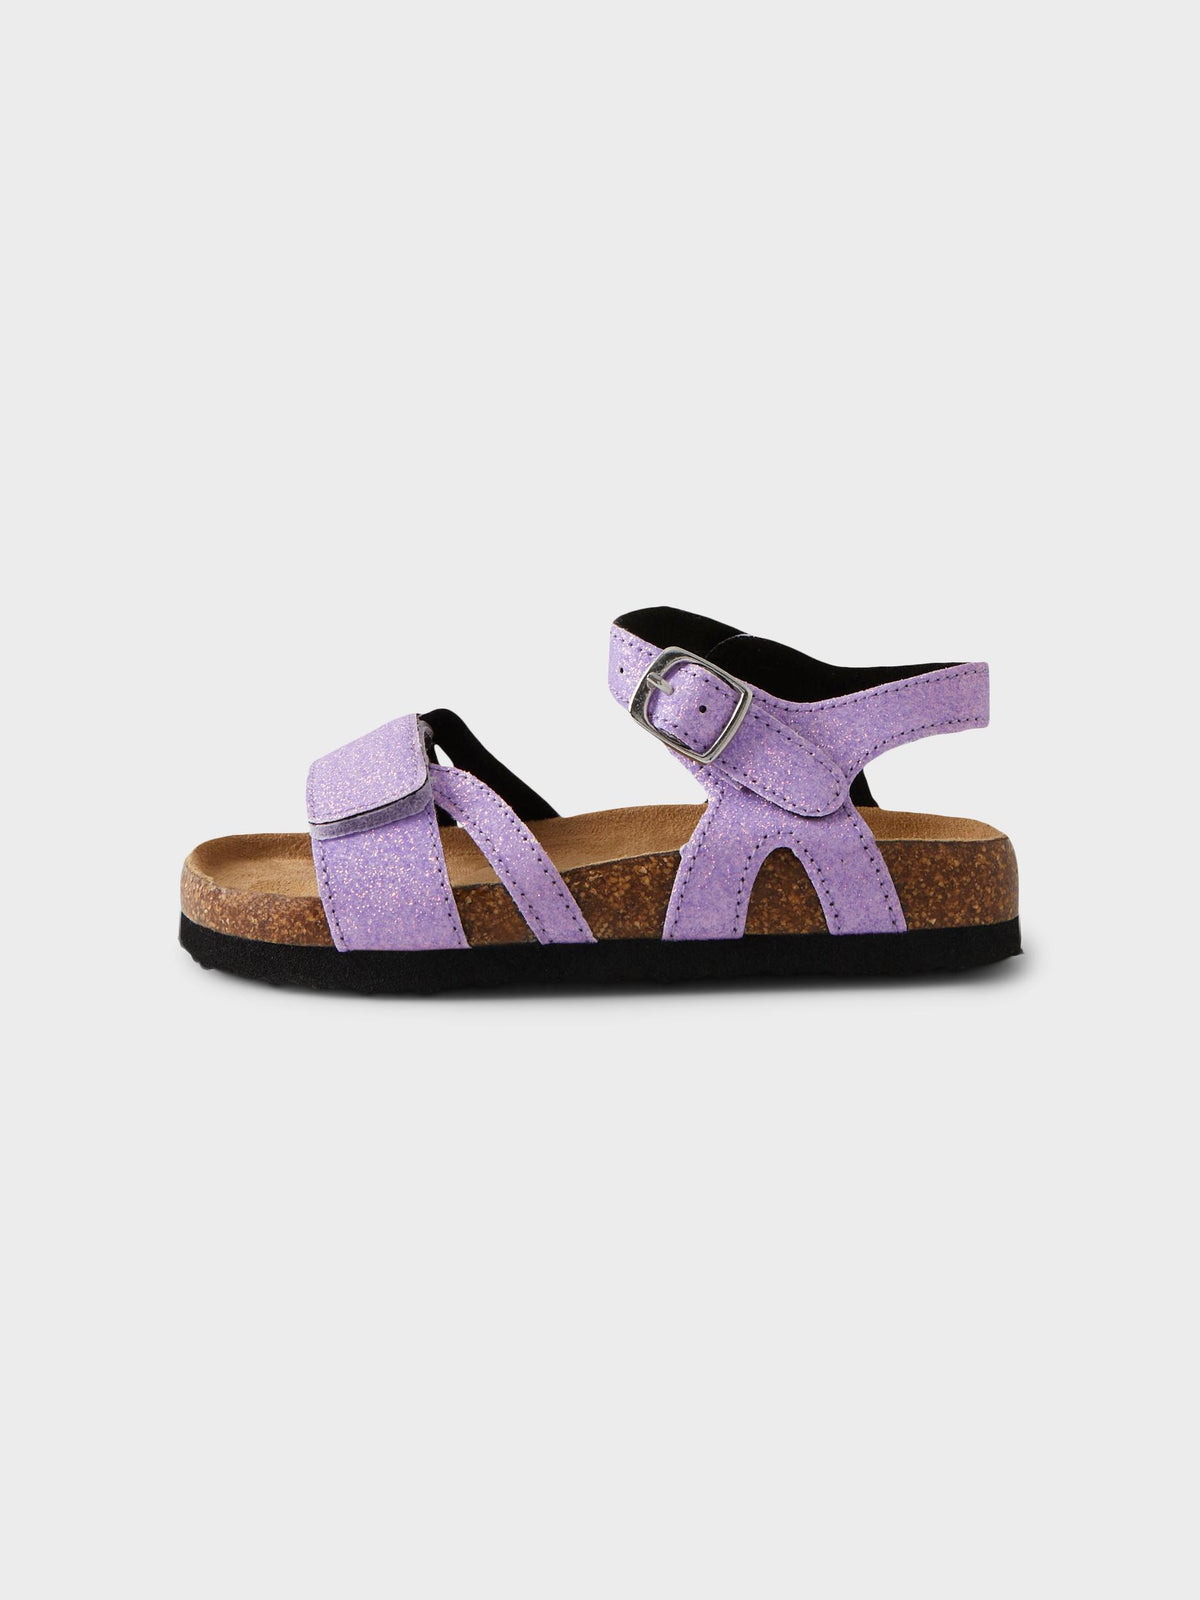 Name it sandal med glimmer - Sand verbena - sandal - MamaMilla